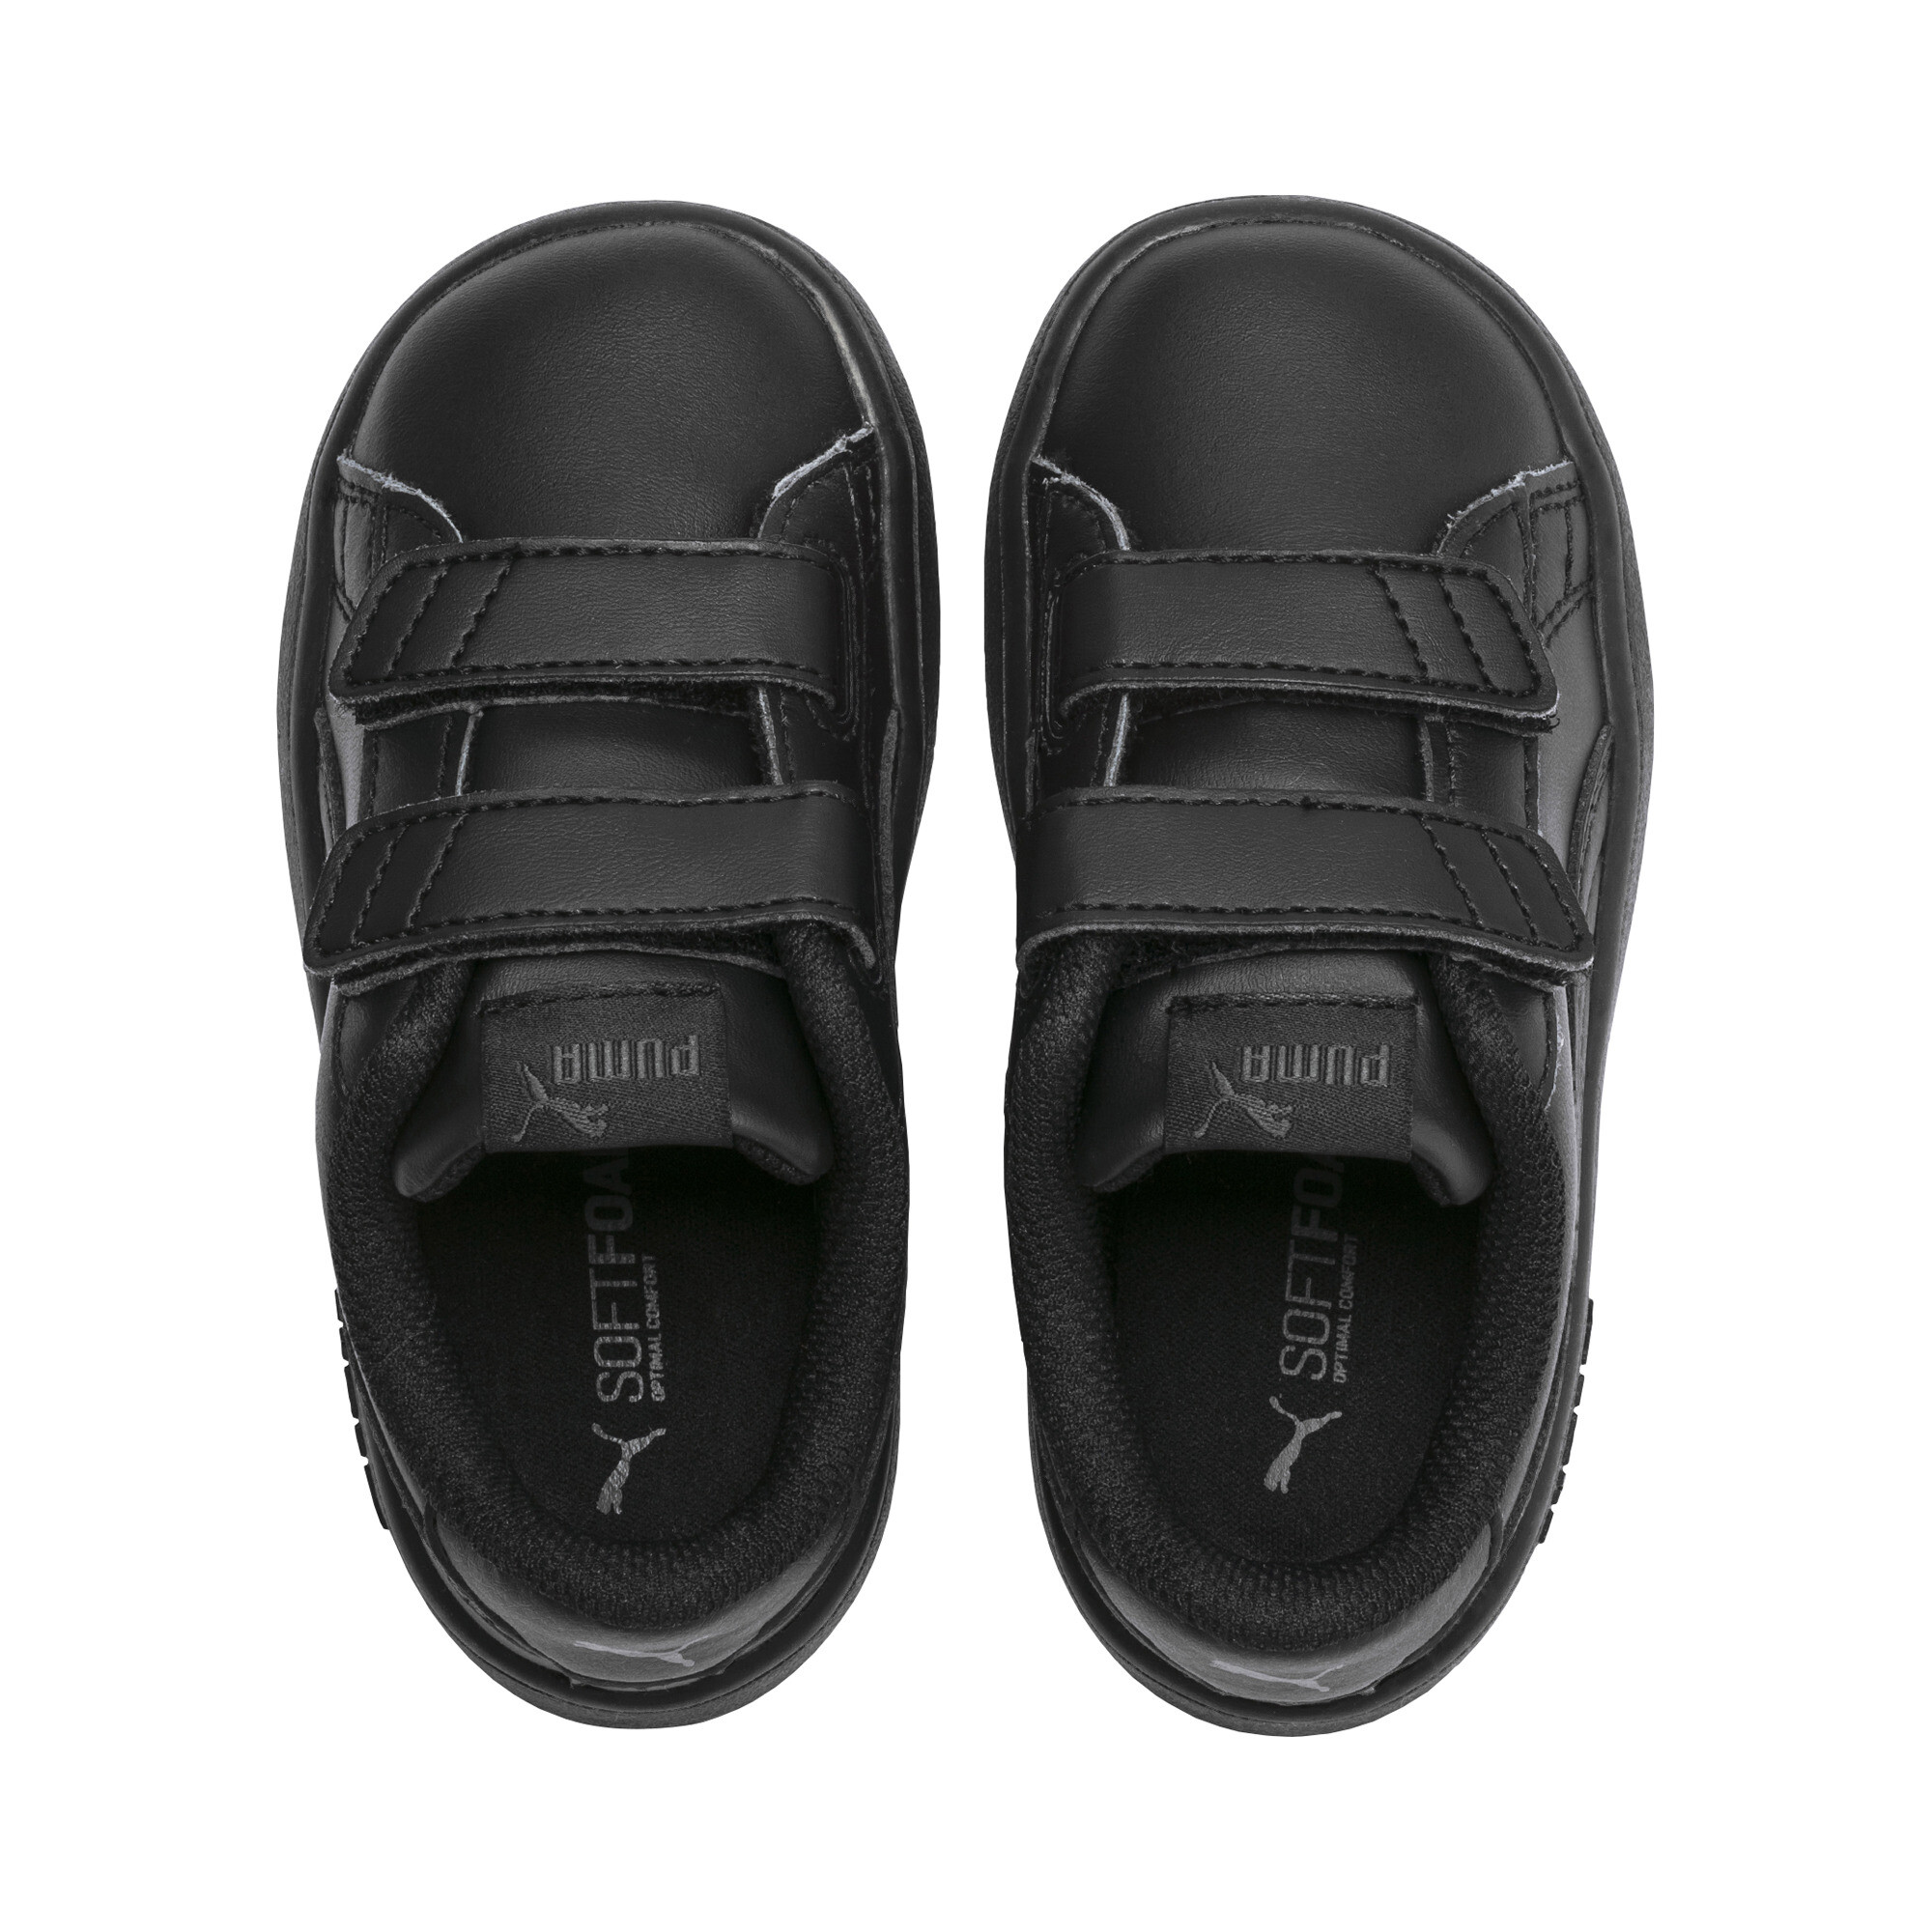 Kids' PUMA Smash V2 Trainers Shoes In Black, Size EU 21